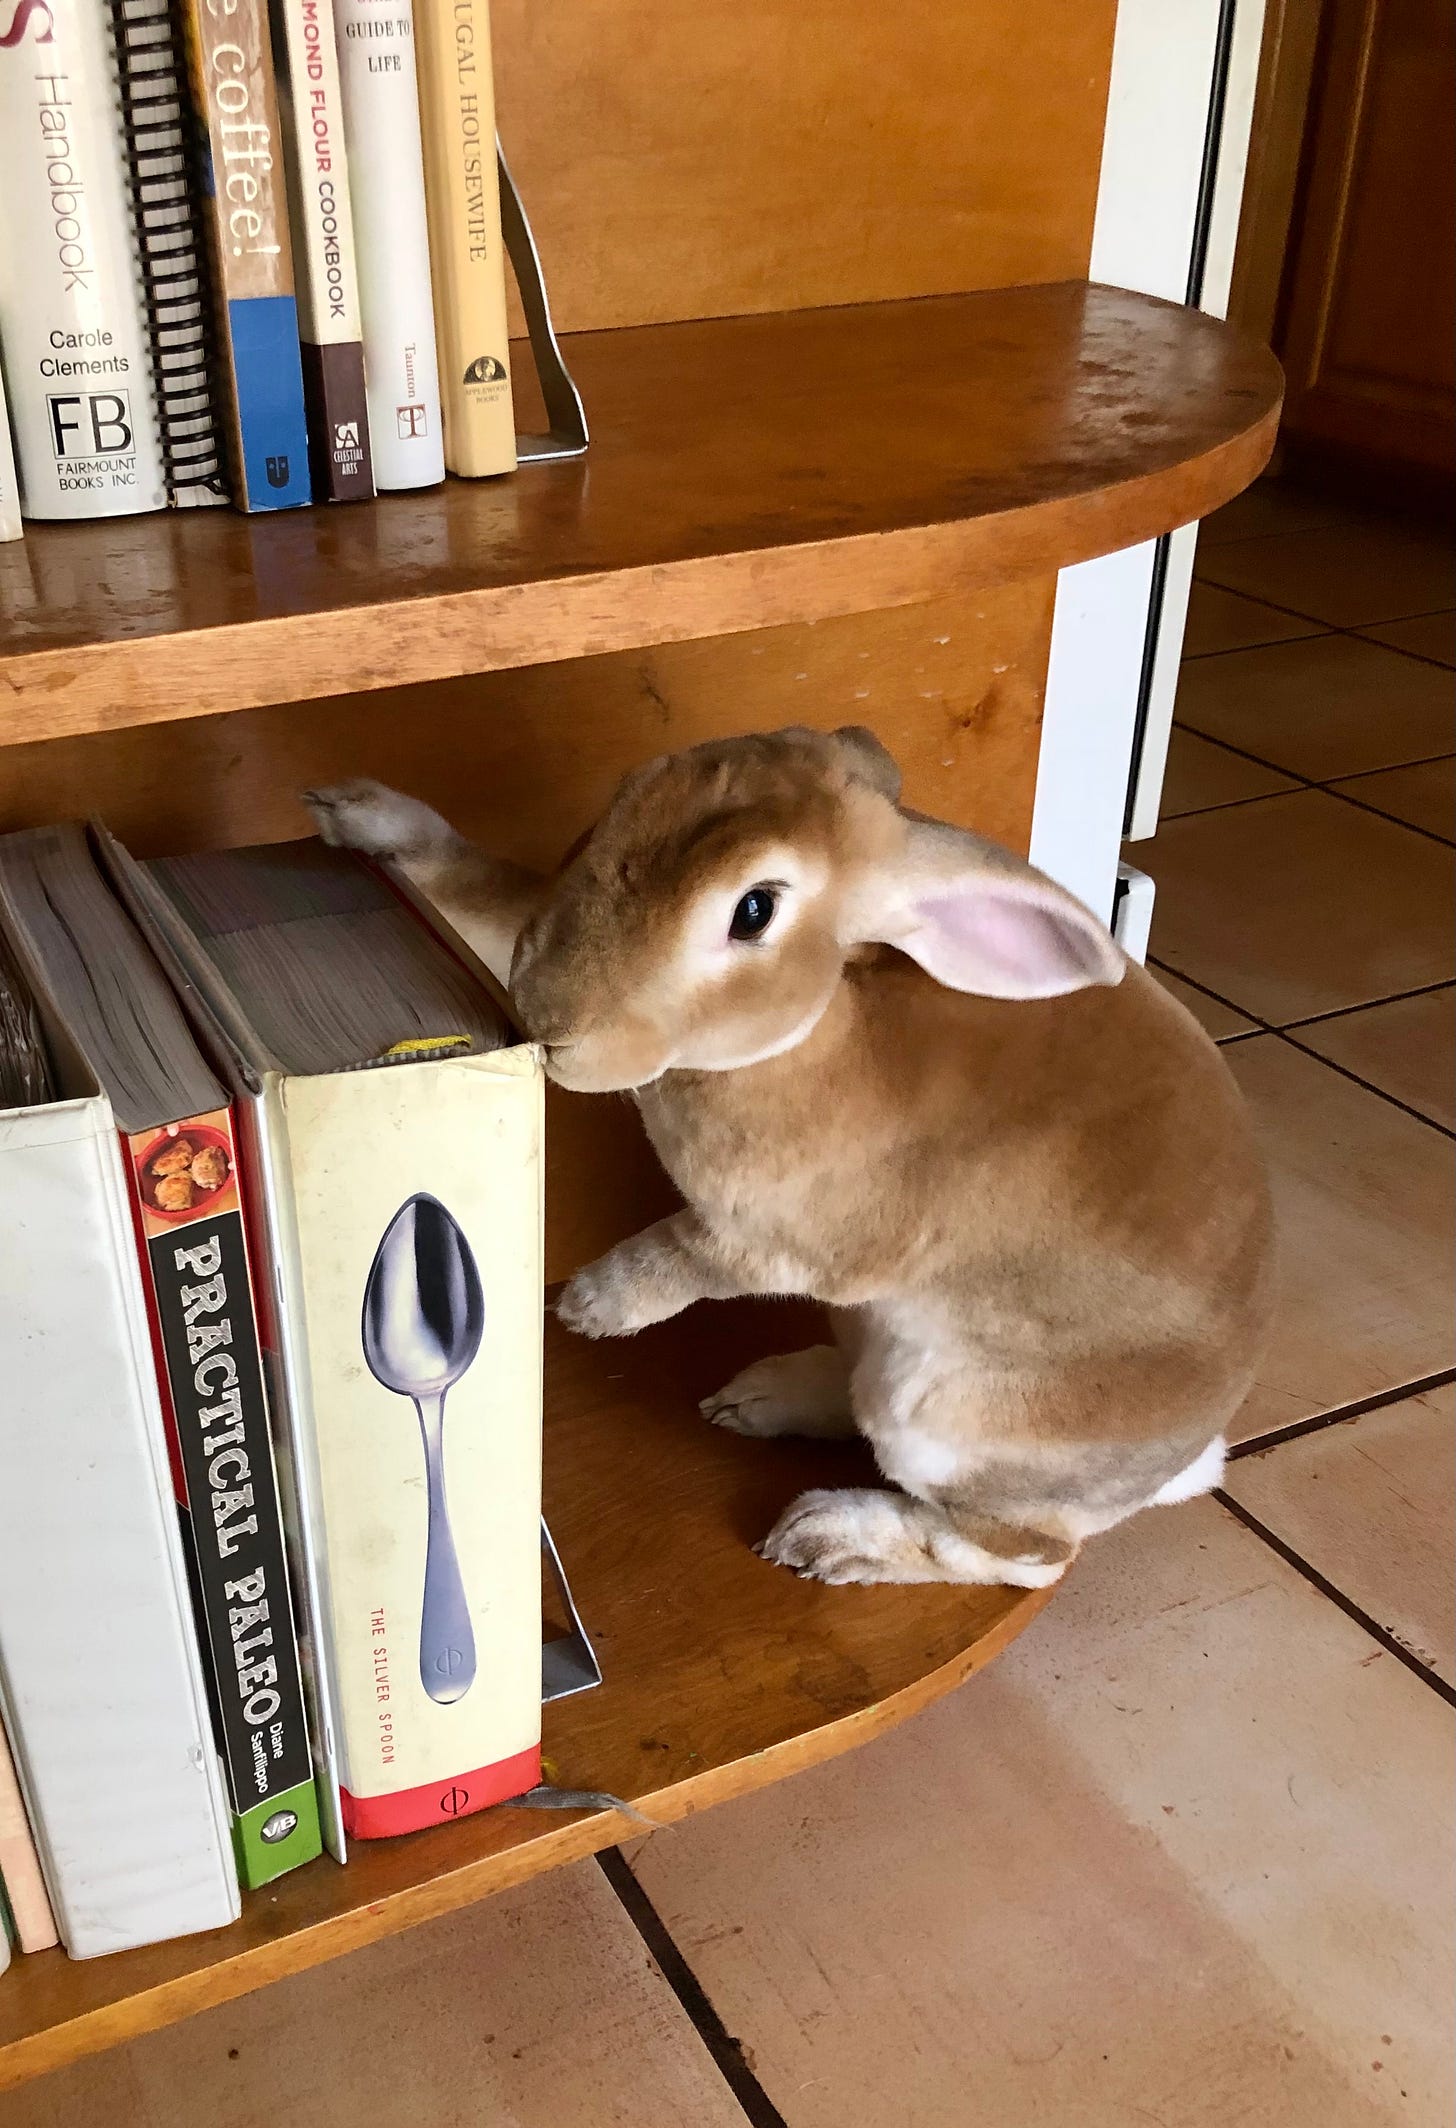 Rabbit and cookbooks